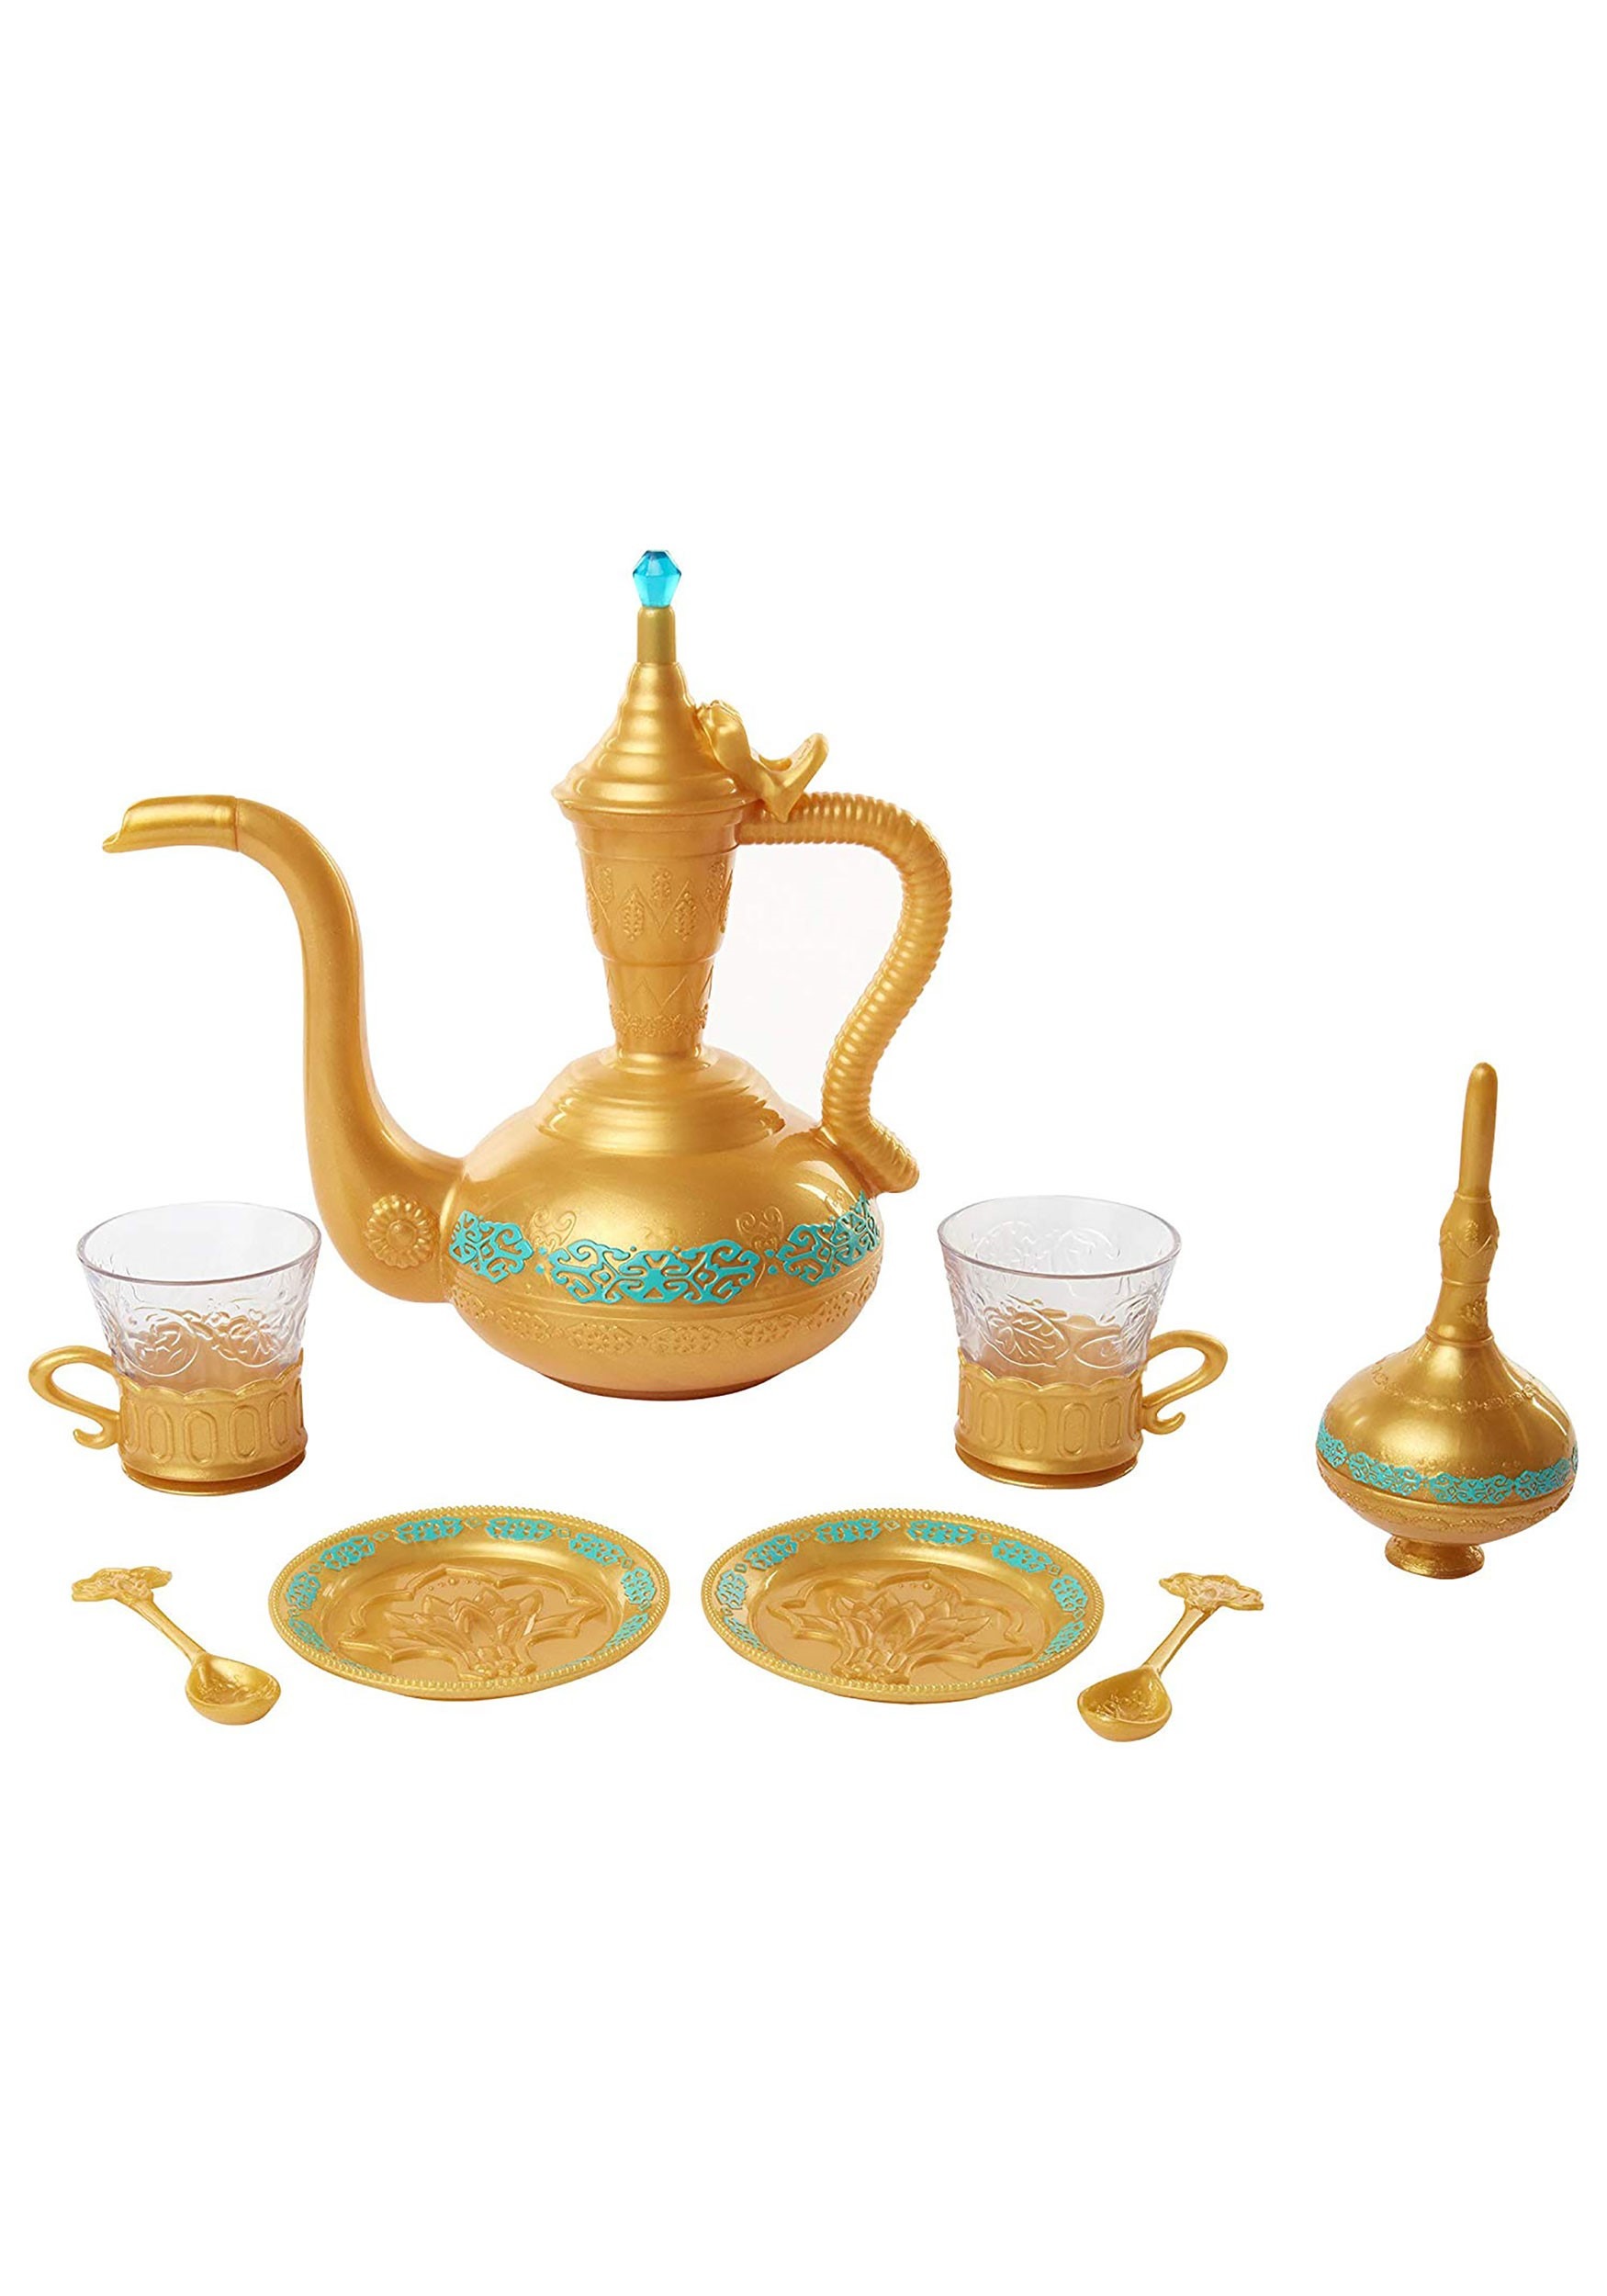 Aladdin Tea Set - Live Action Film